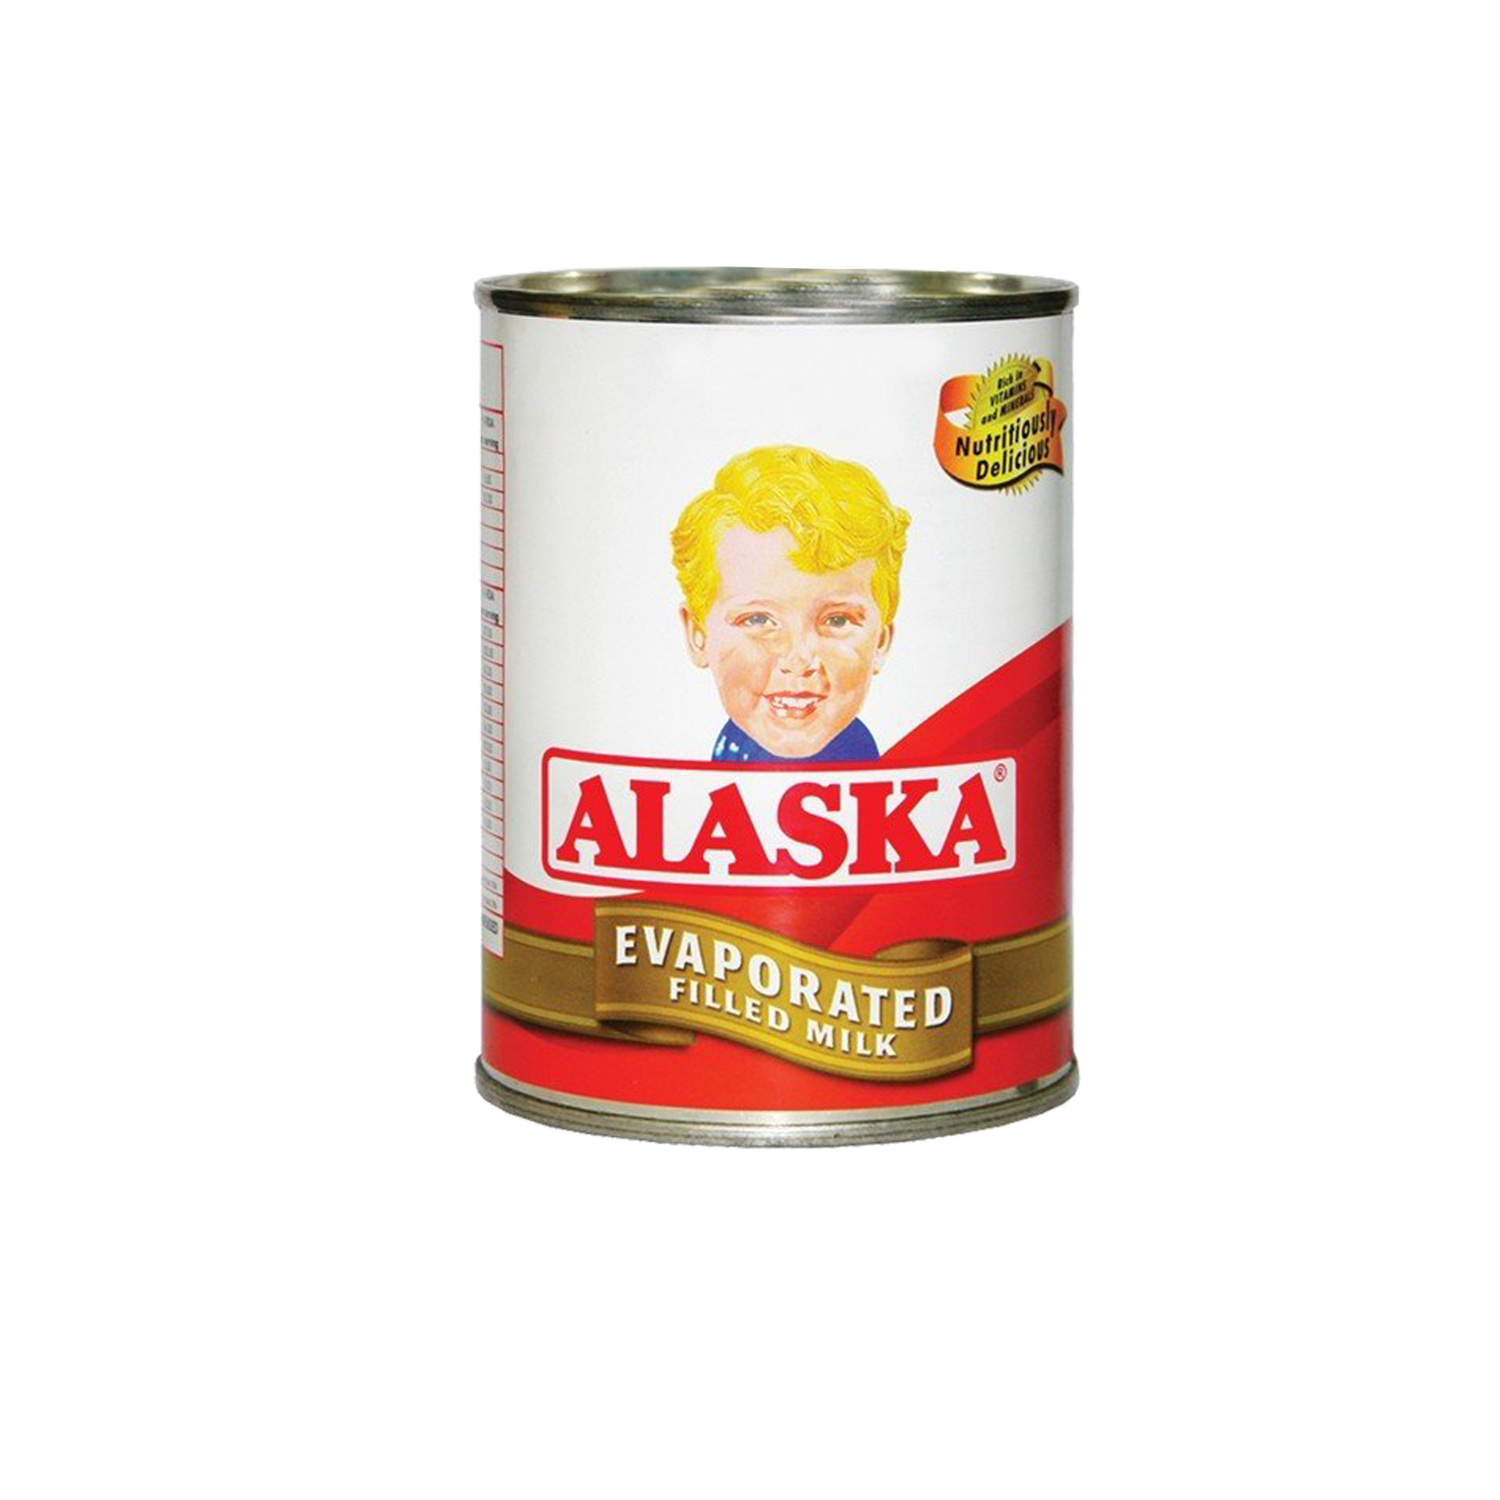 Alaska Evaporated Filled Milk 397